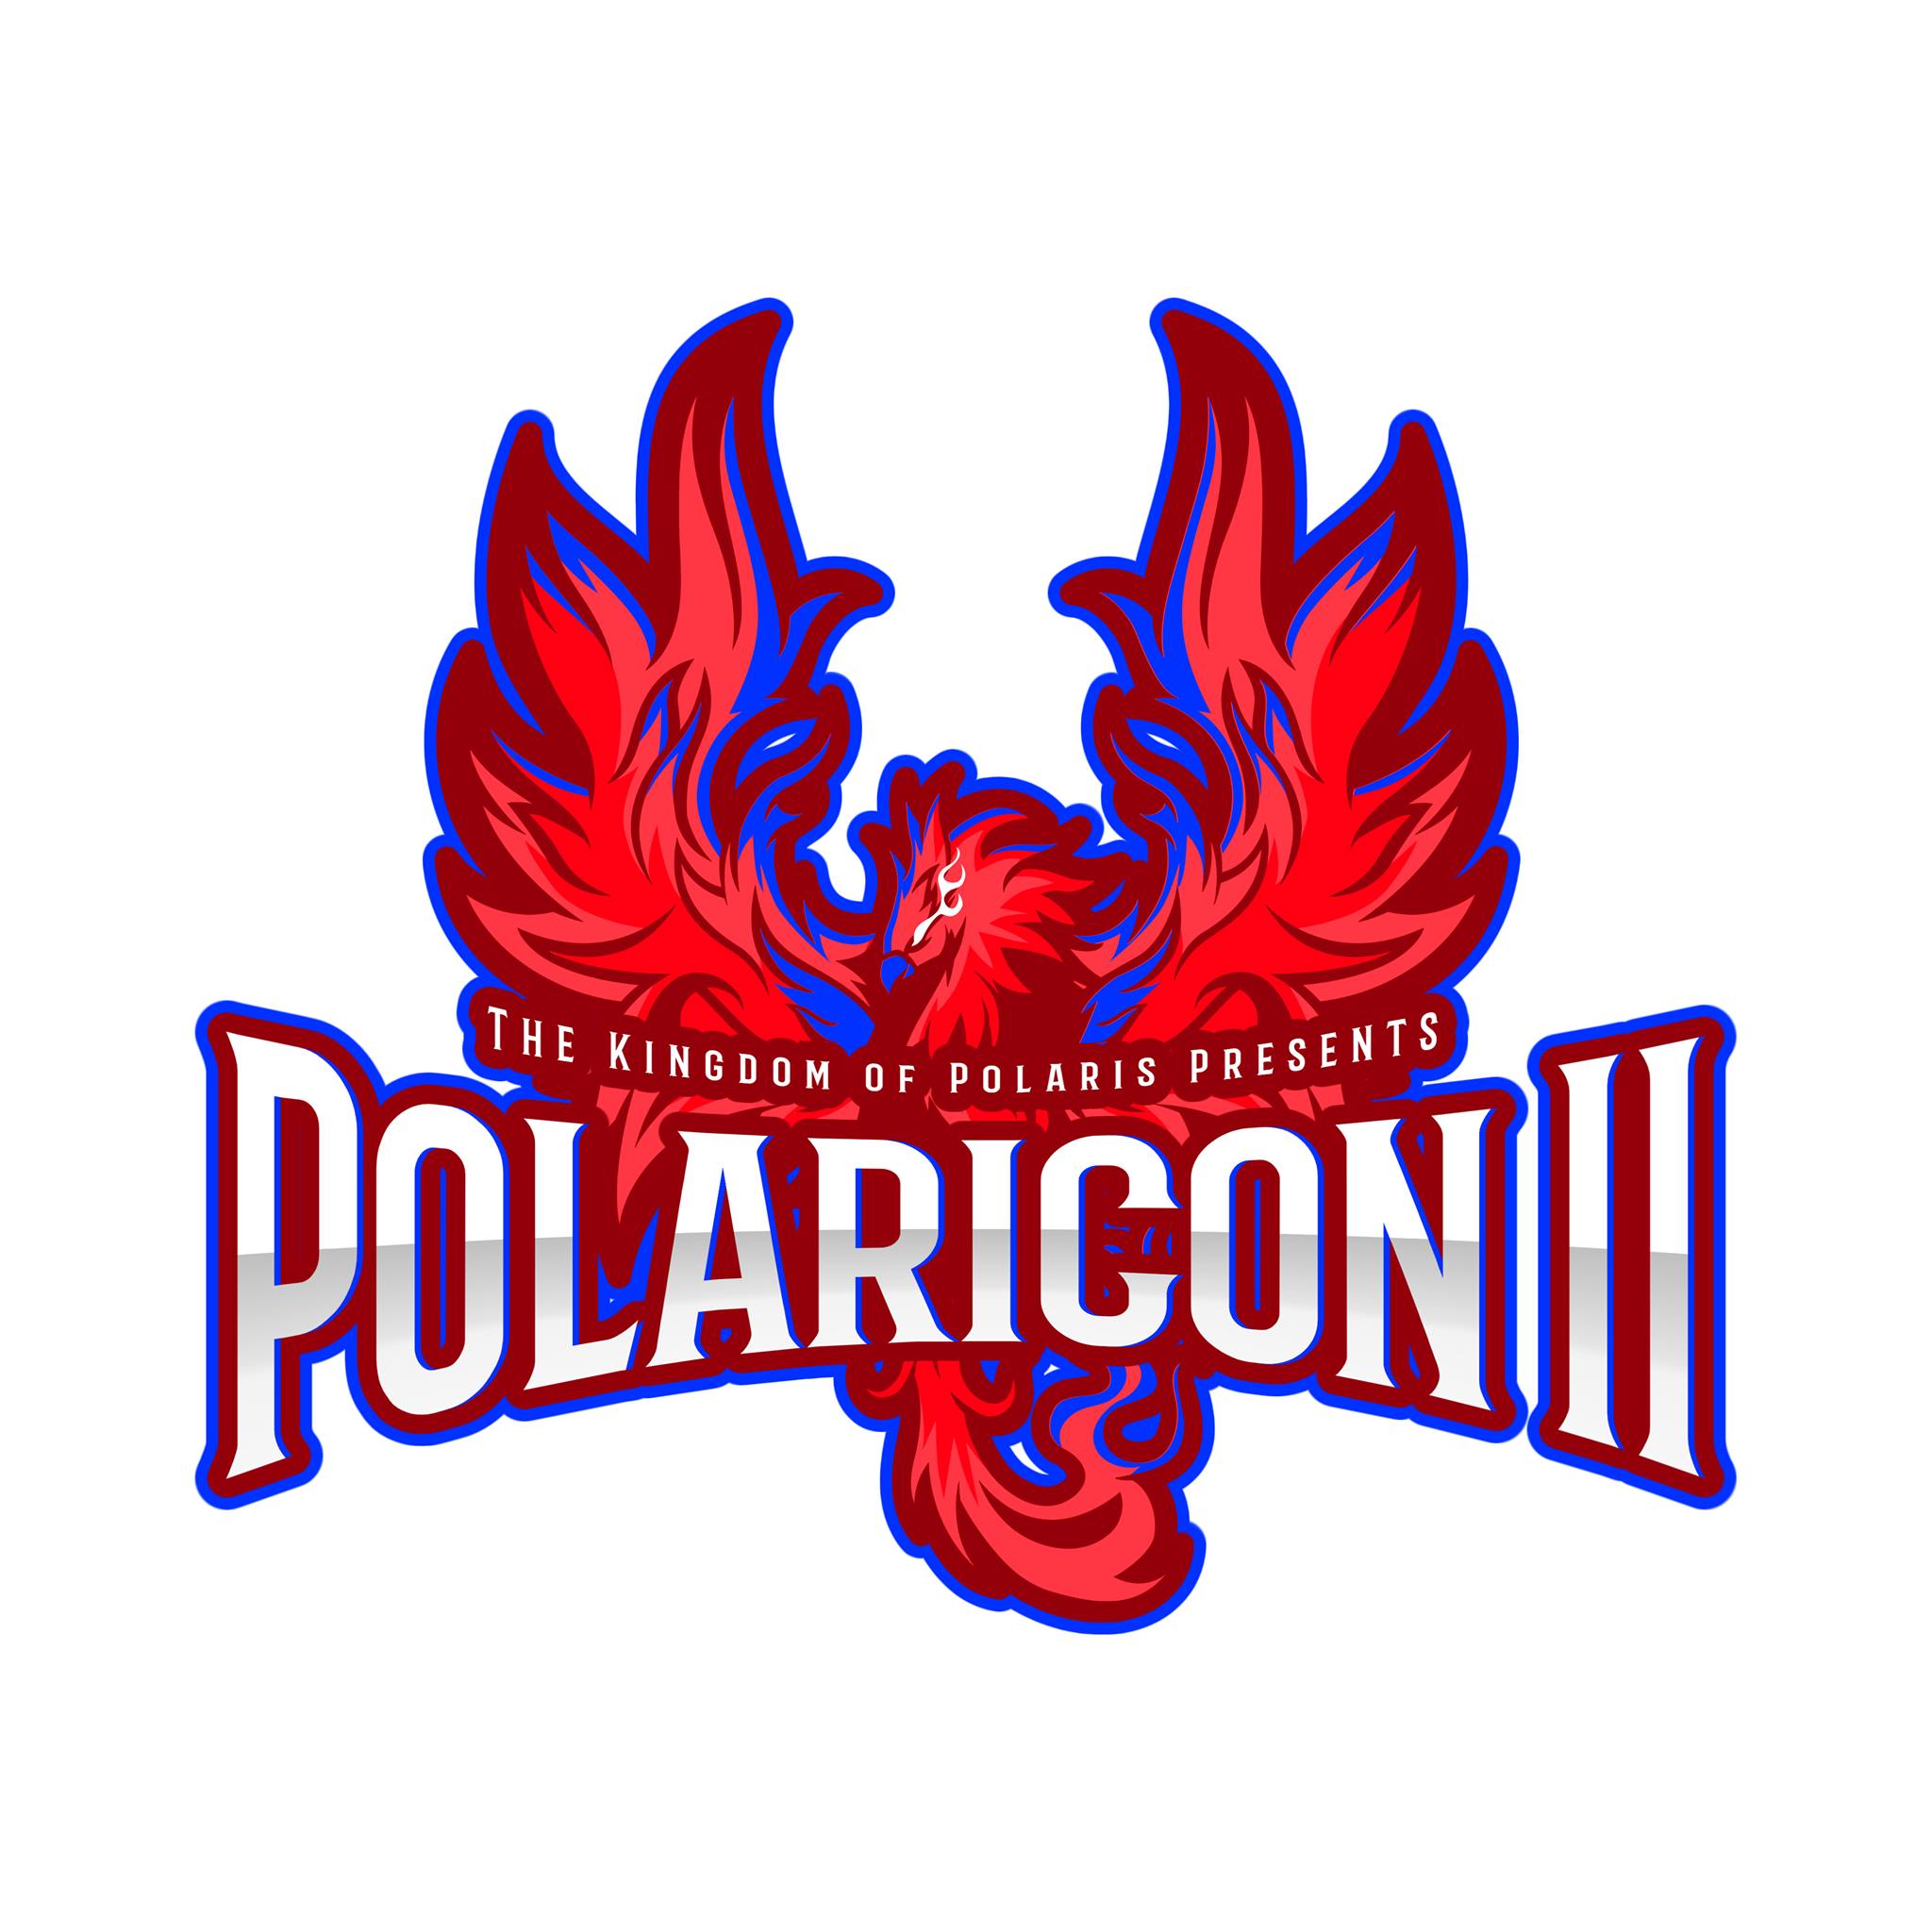 Polaricon II logo.jpg